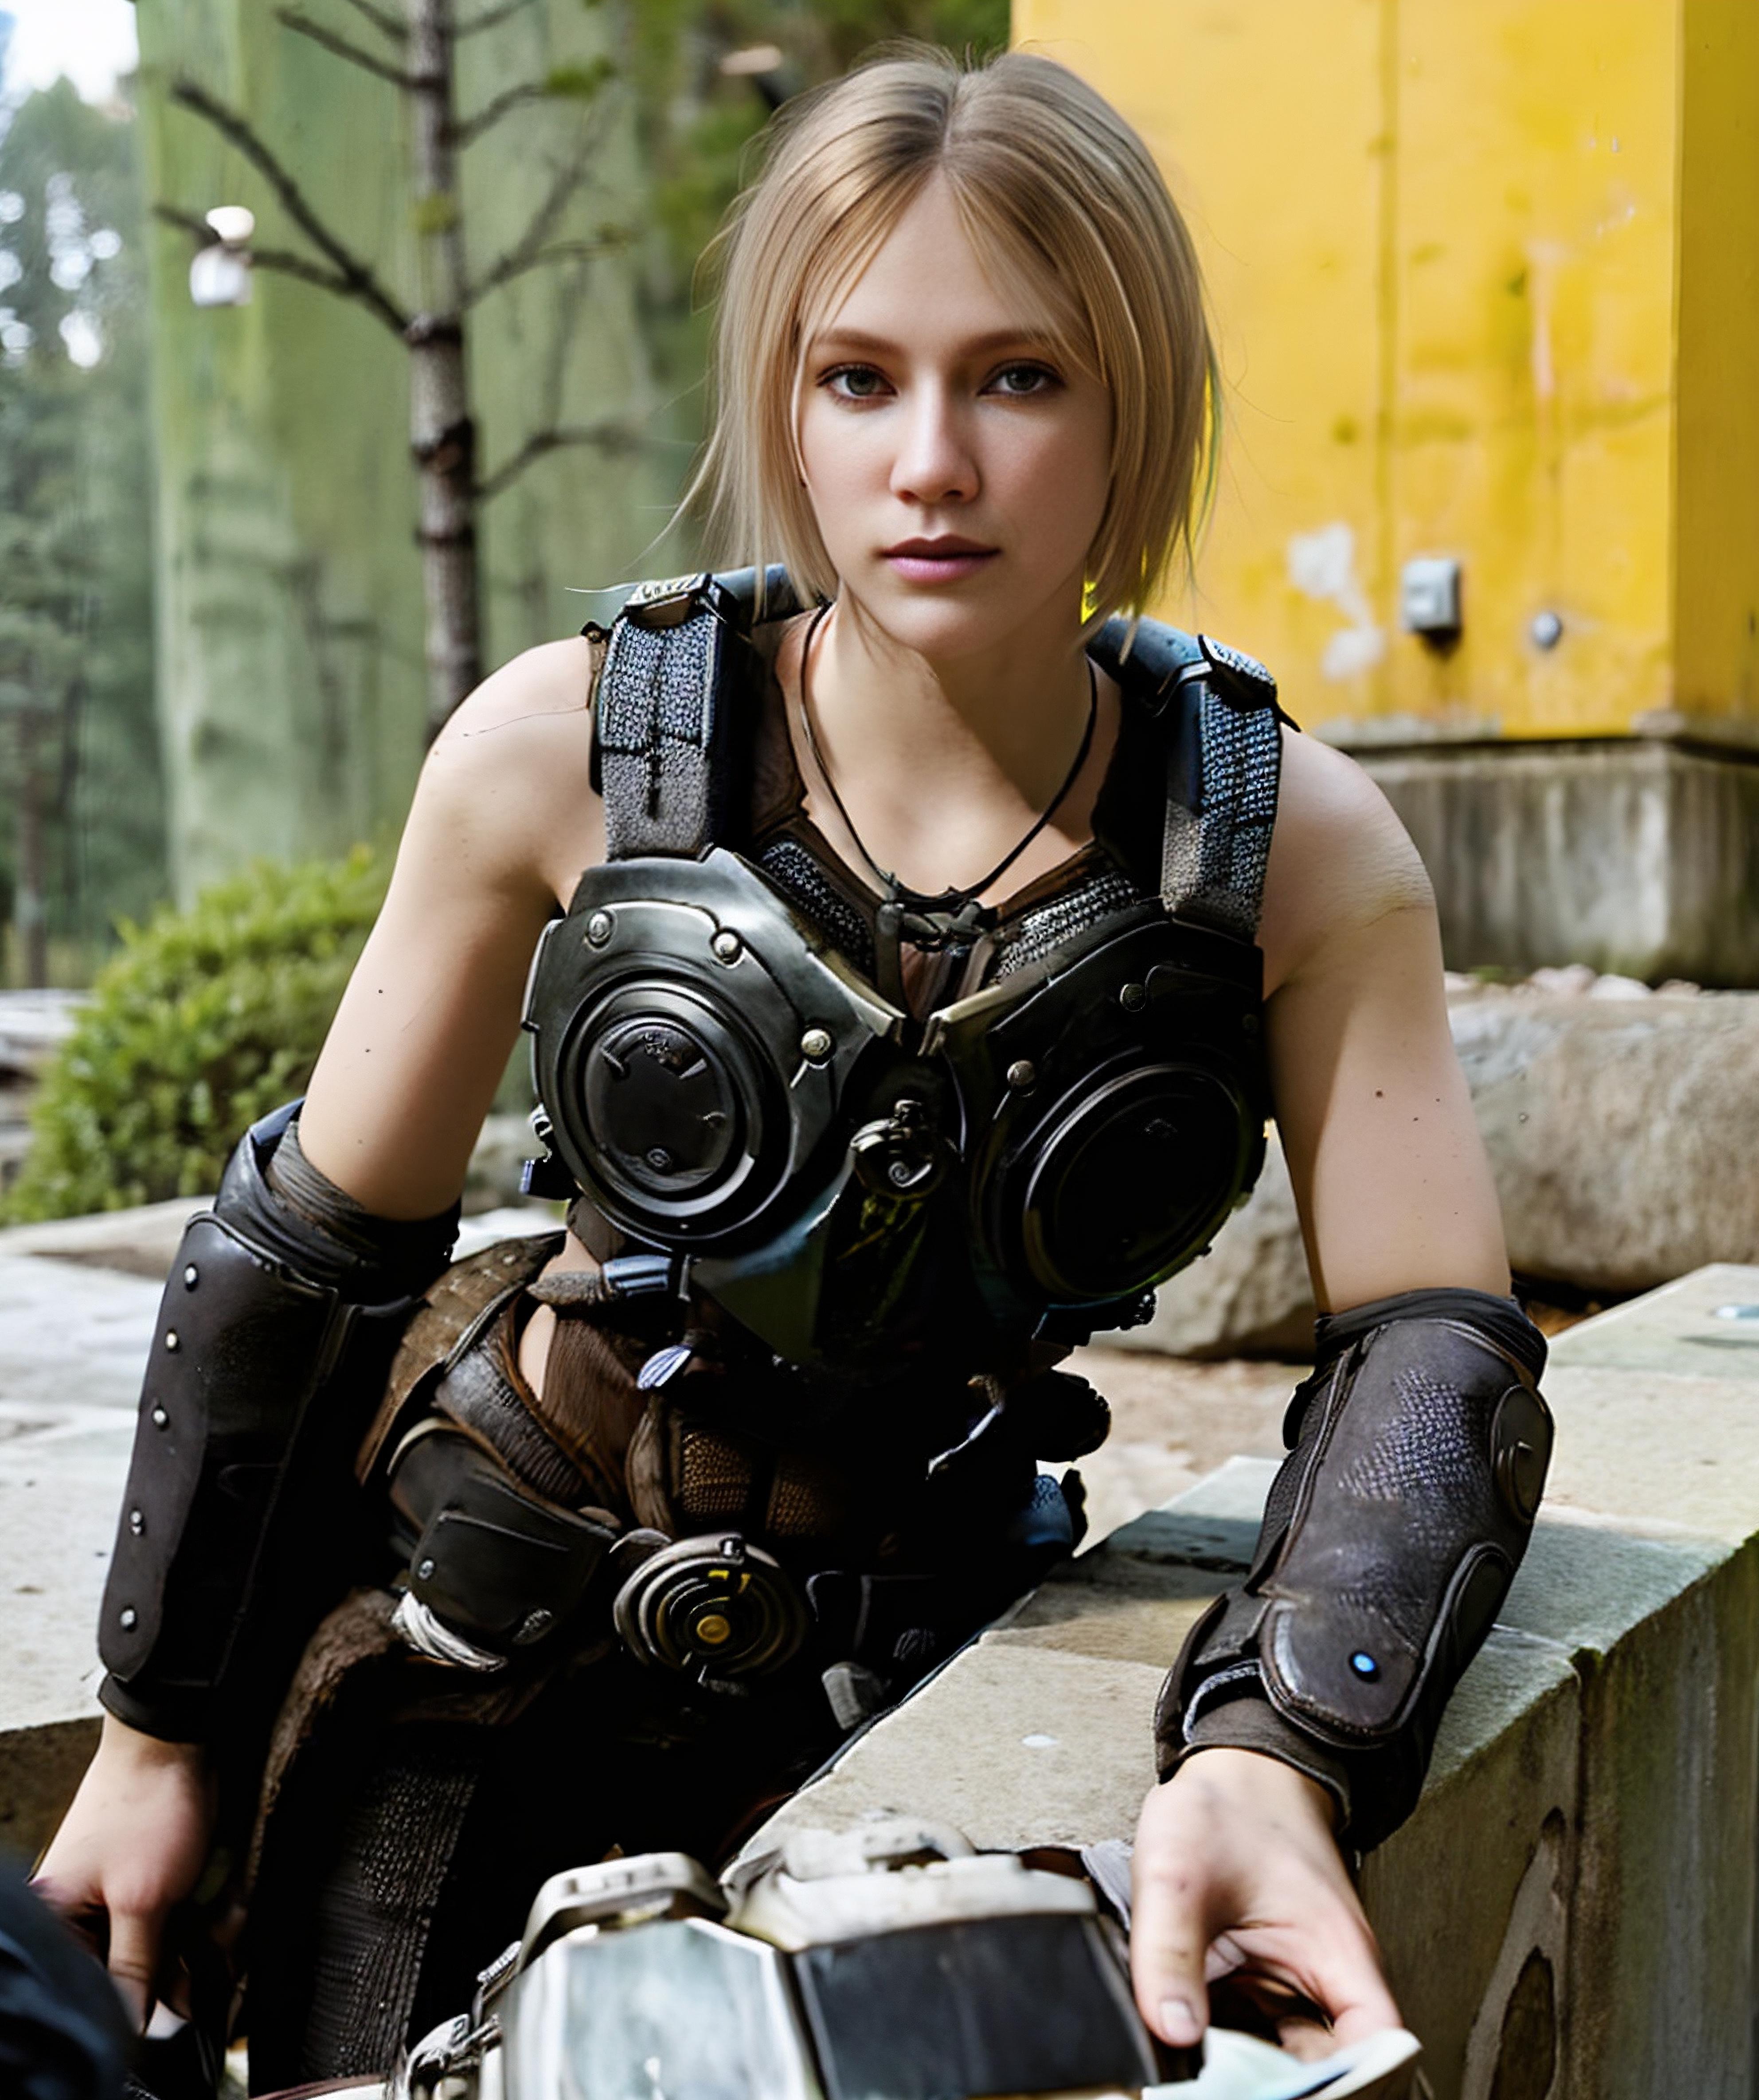 Anya Stroud | Gears of War image by doomguy11111